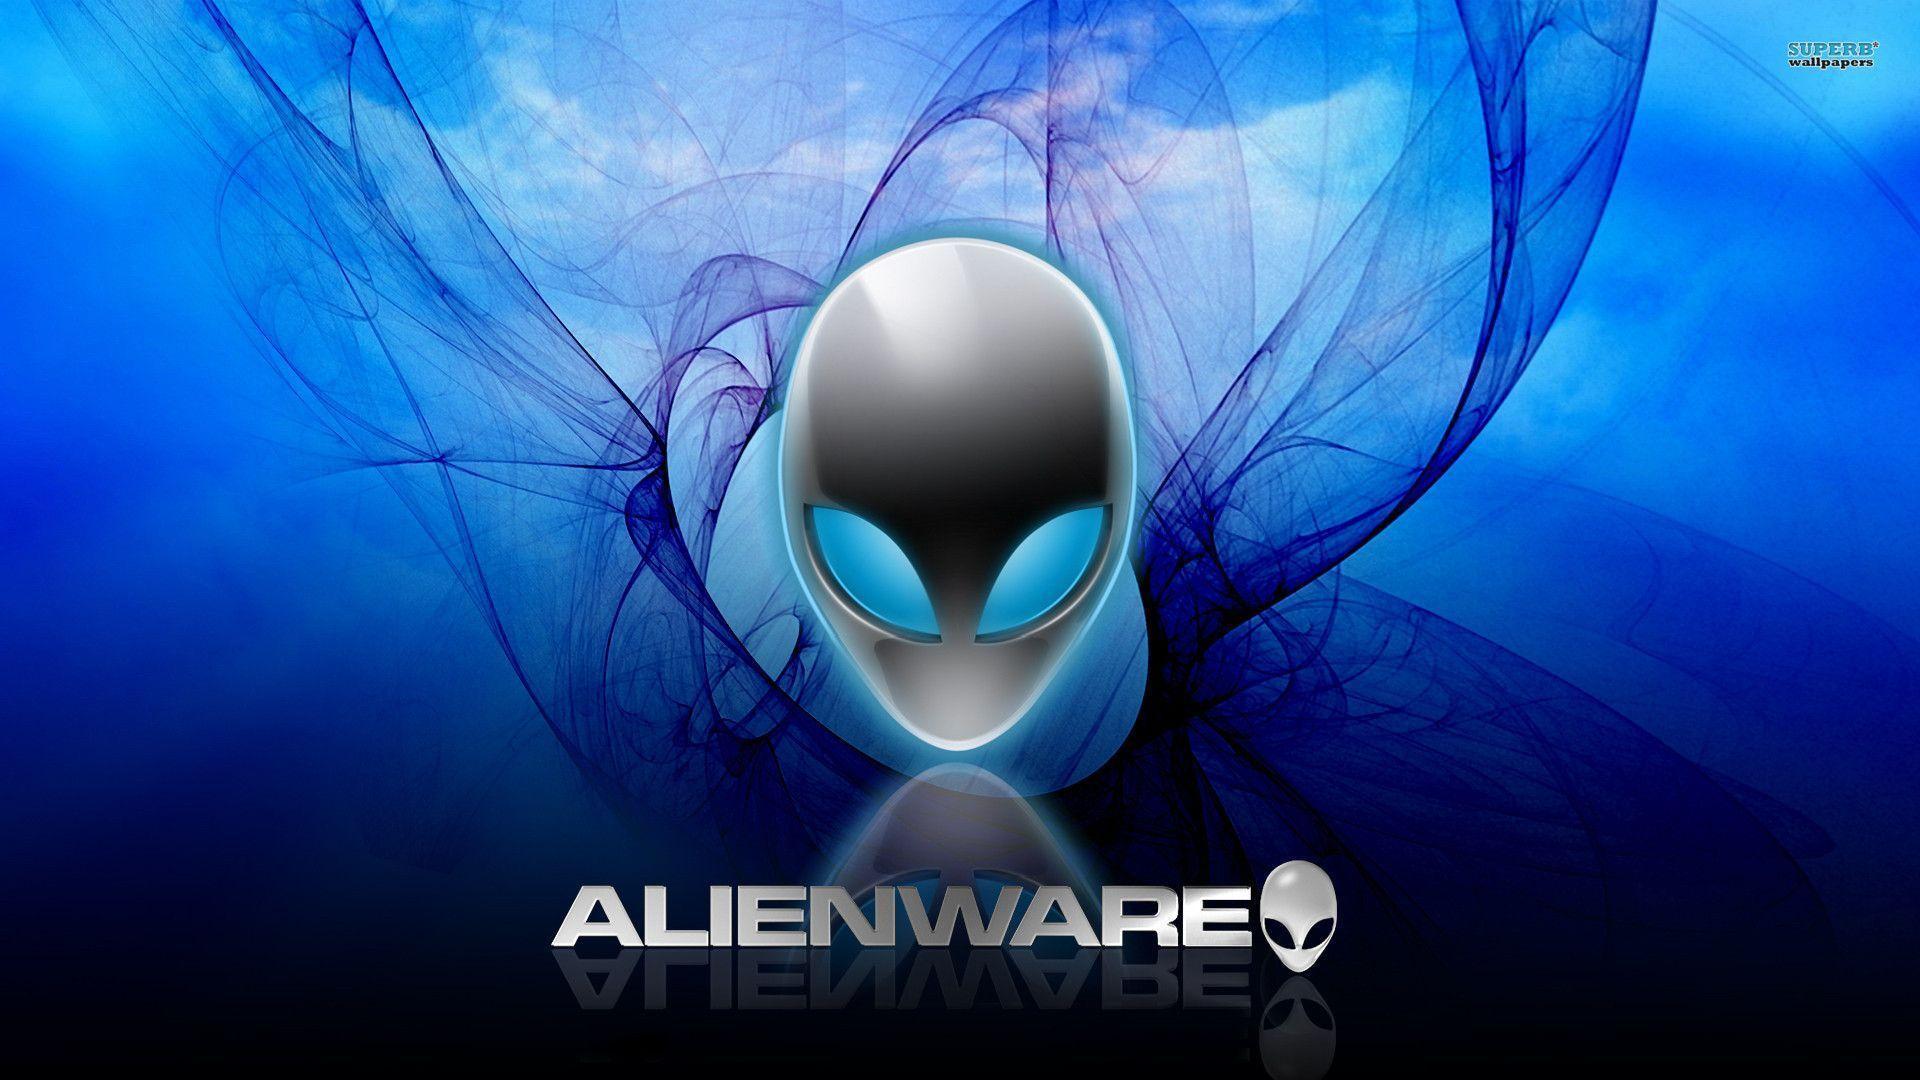 Dell Alienware Wallpapers - Top Hình Ảnh Đẹp